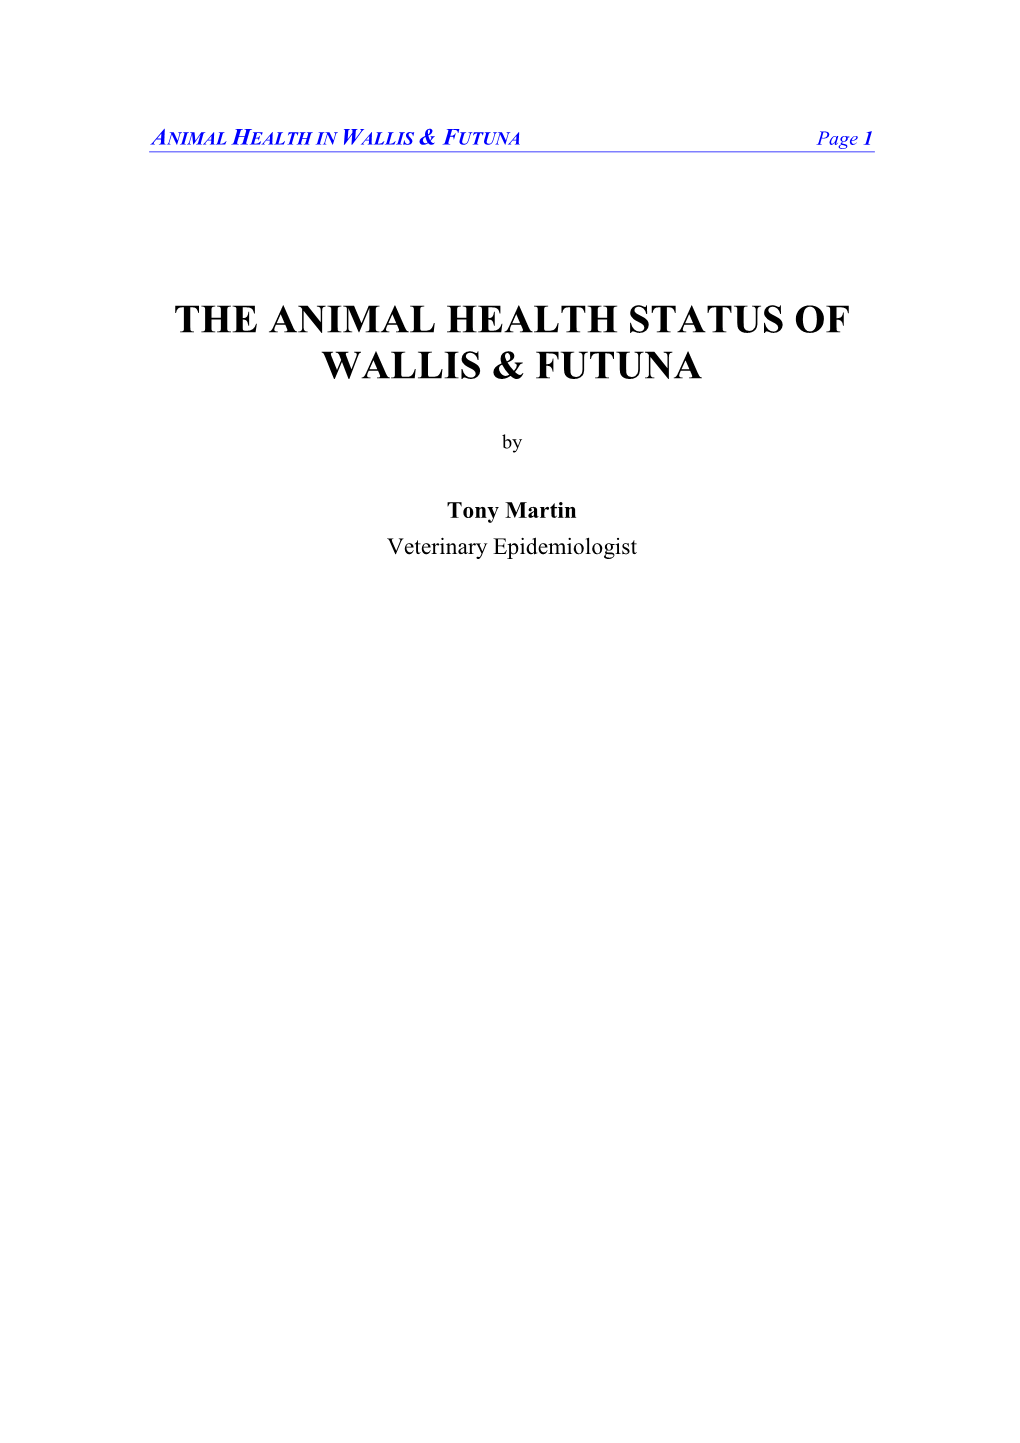 The Animal Health Status of Wallis & Futuna